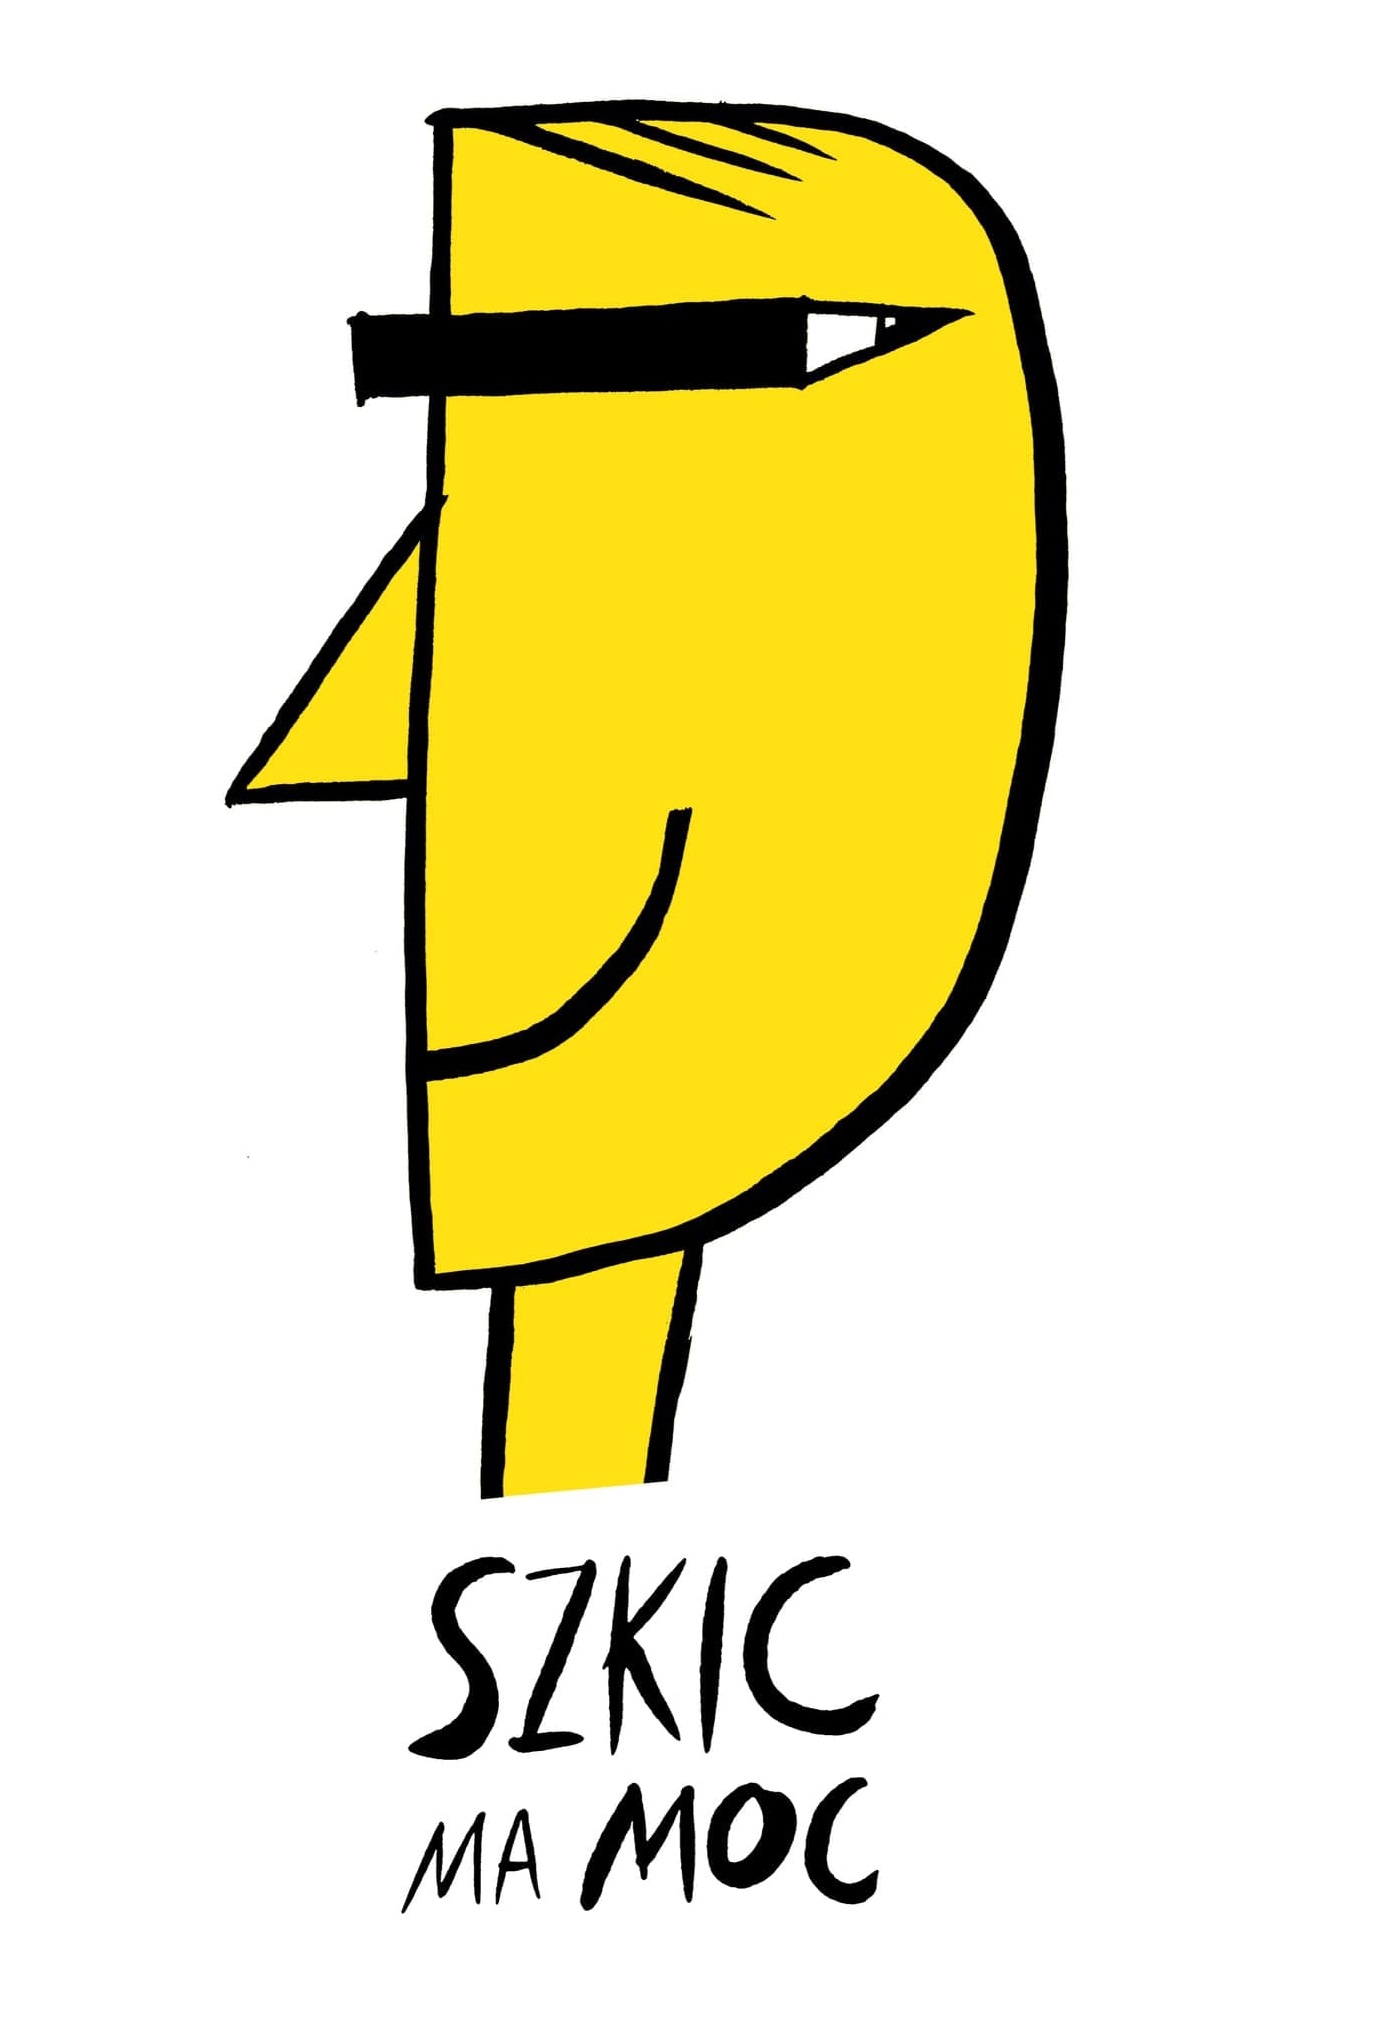 szkic_ma_moc_logo